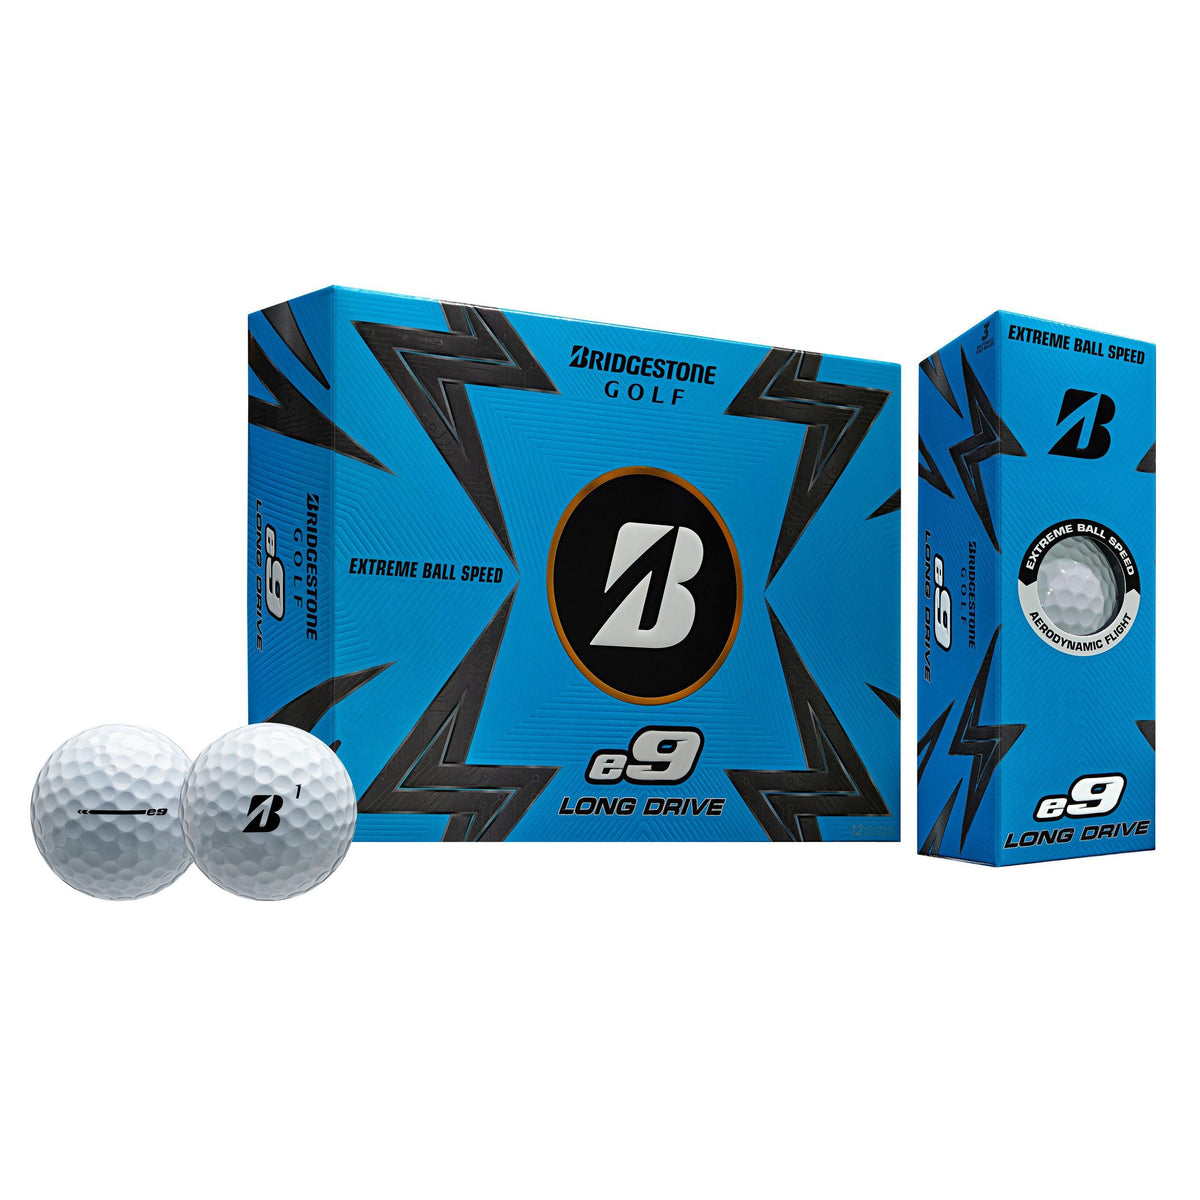 Bridgestone Extra Soft provides soft alternative for golf ball's